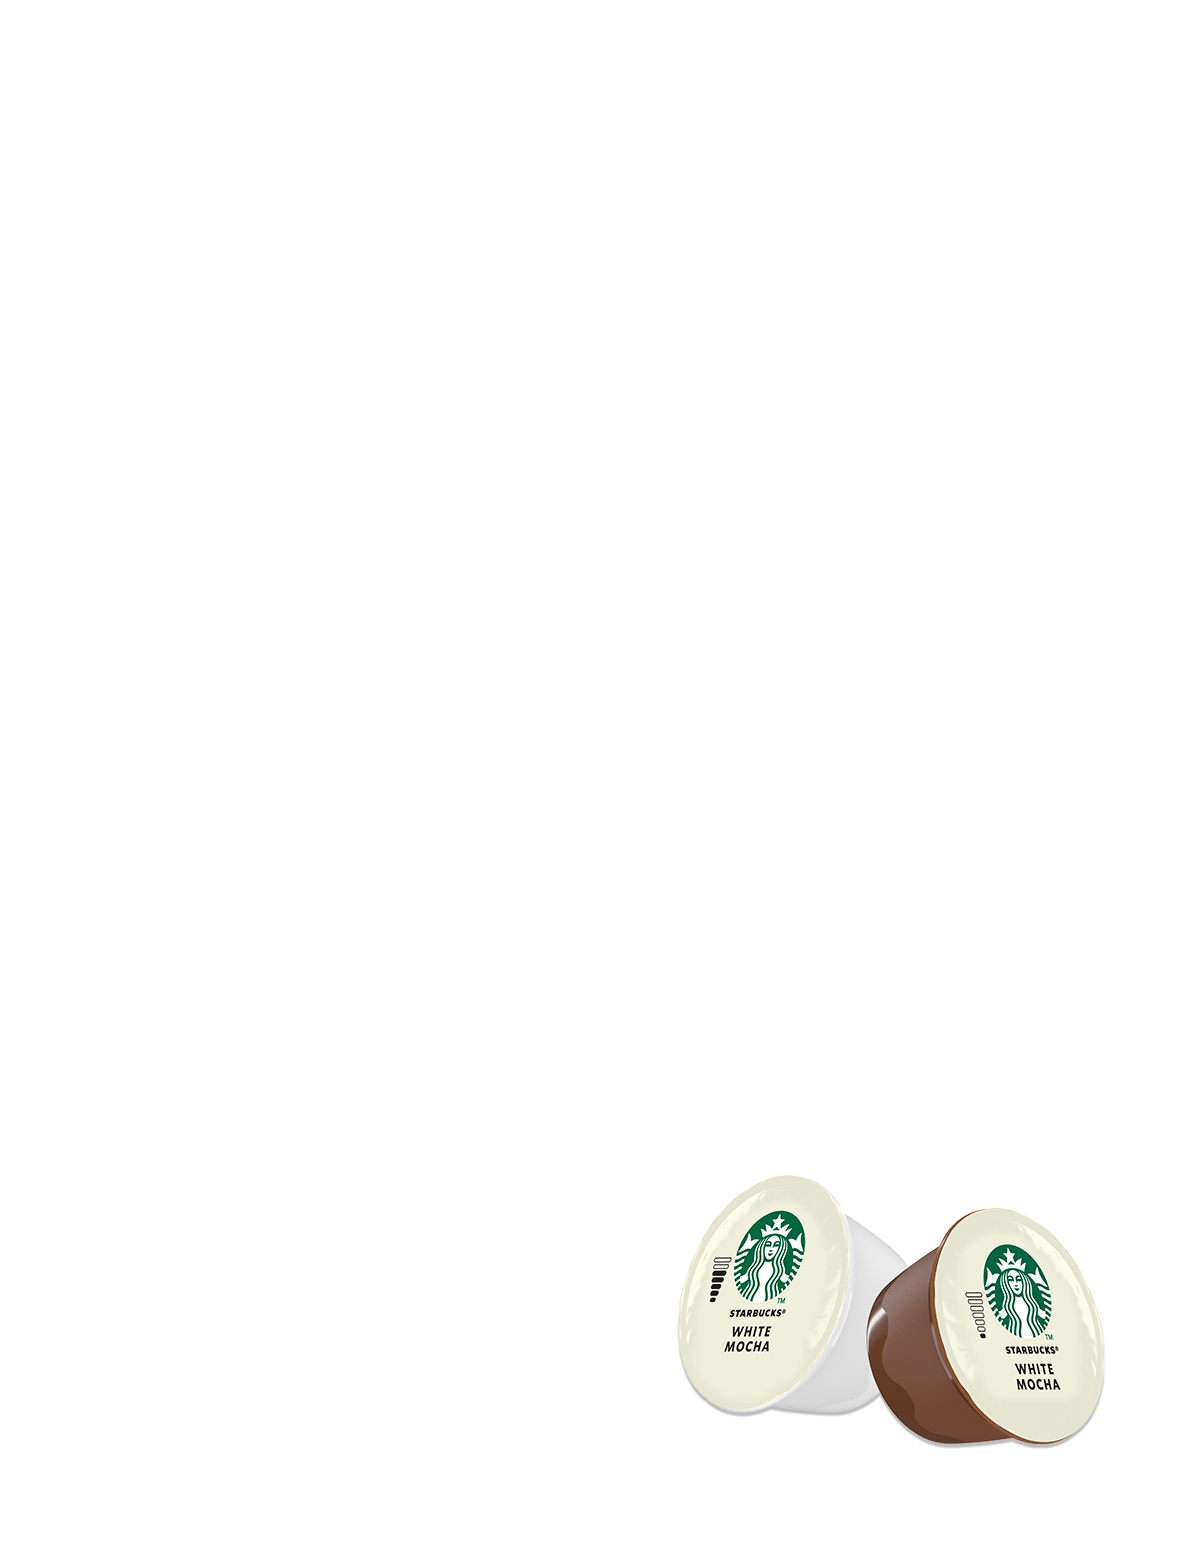 Starbucks® White Chocolate Mocha